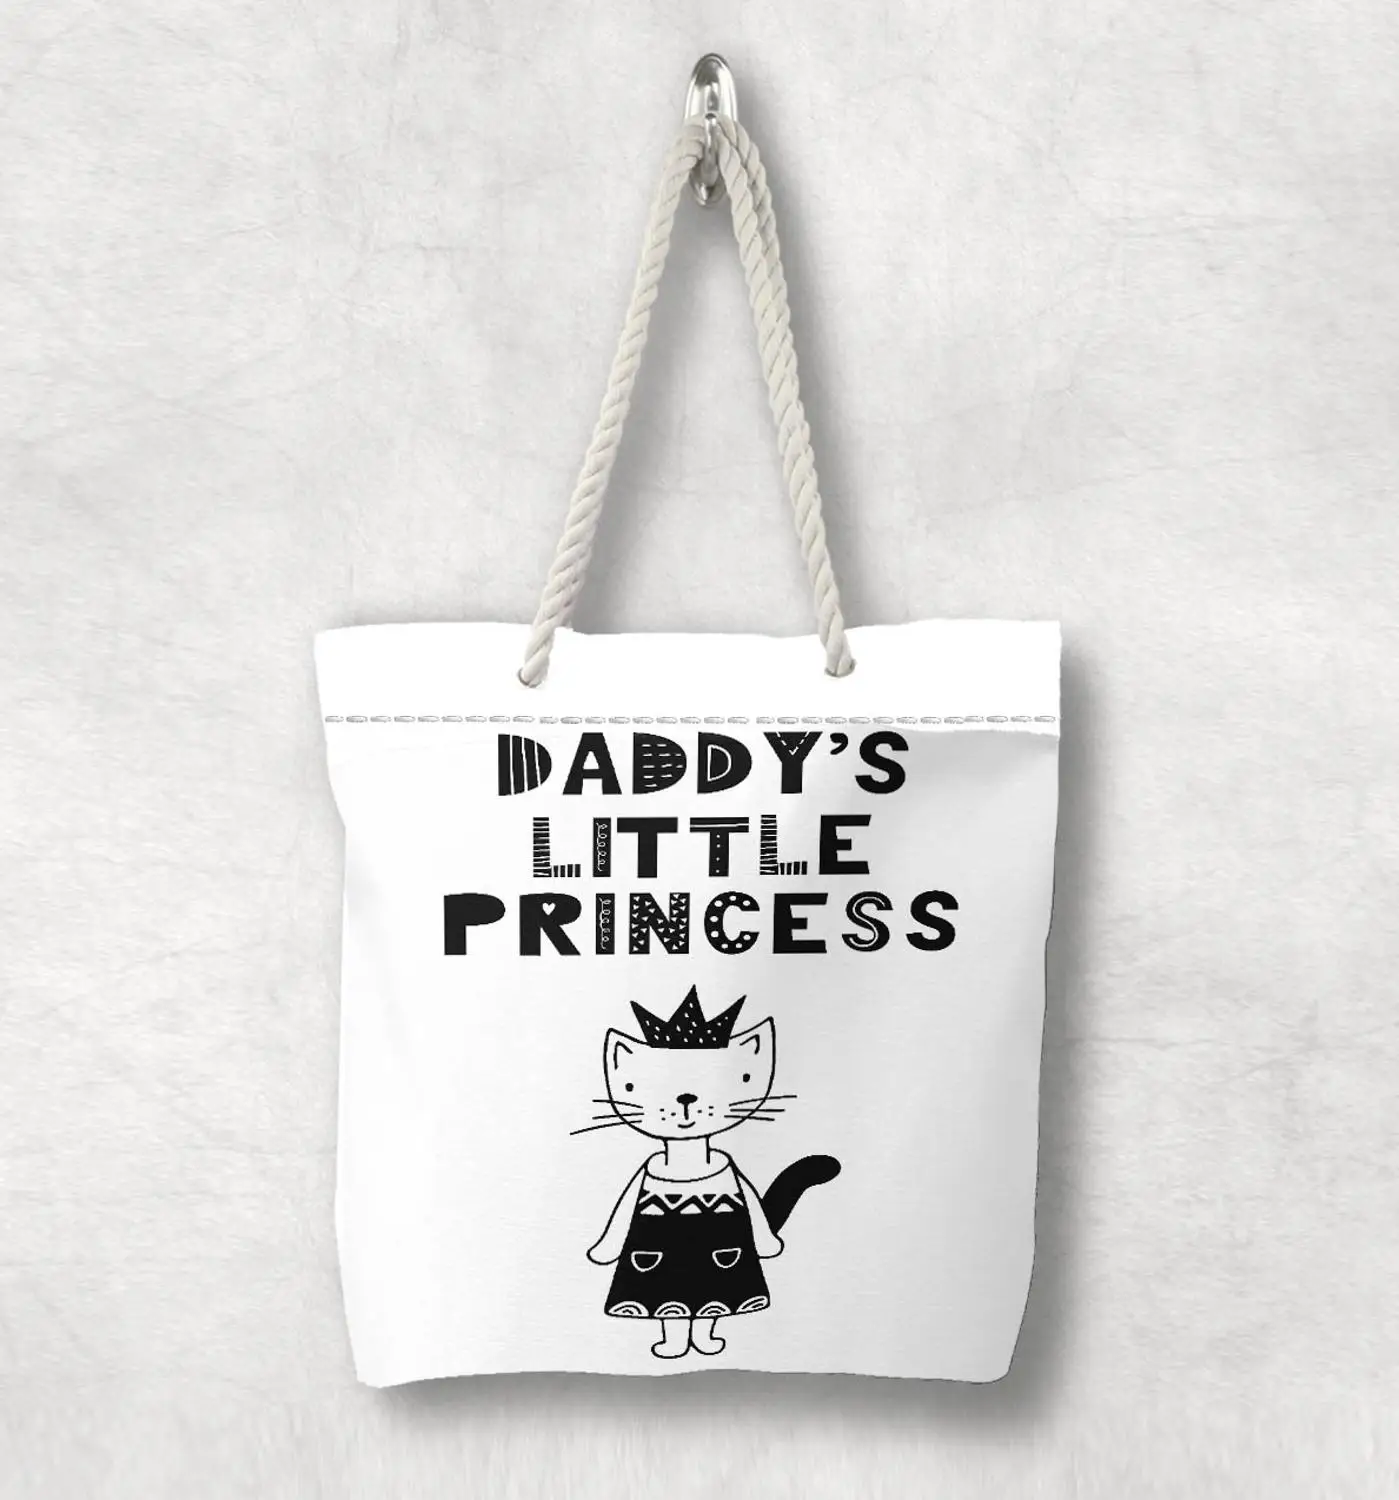 

Else Black White Daddys Little Princess Scandinavian White Rope Handle Canvas Bag Cartoon Print Zippered Tote Bag Shoulder Bag